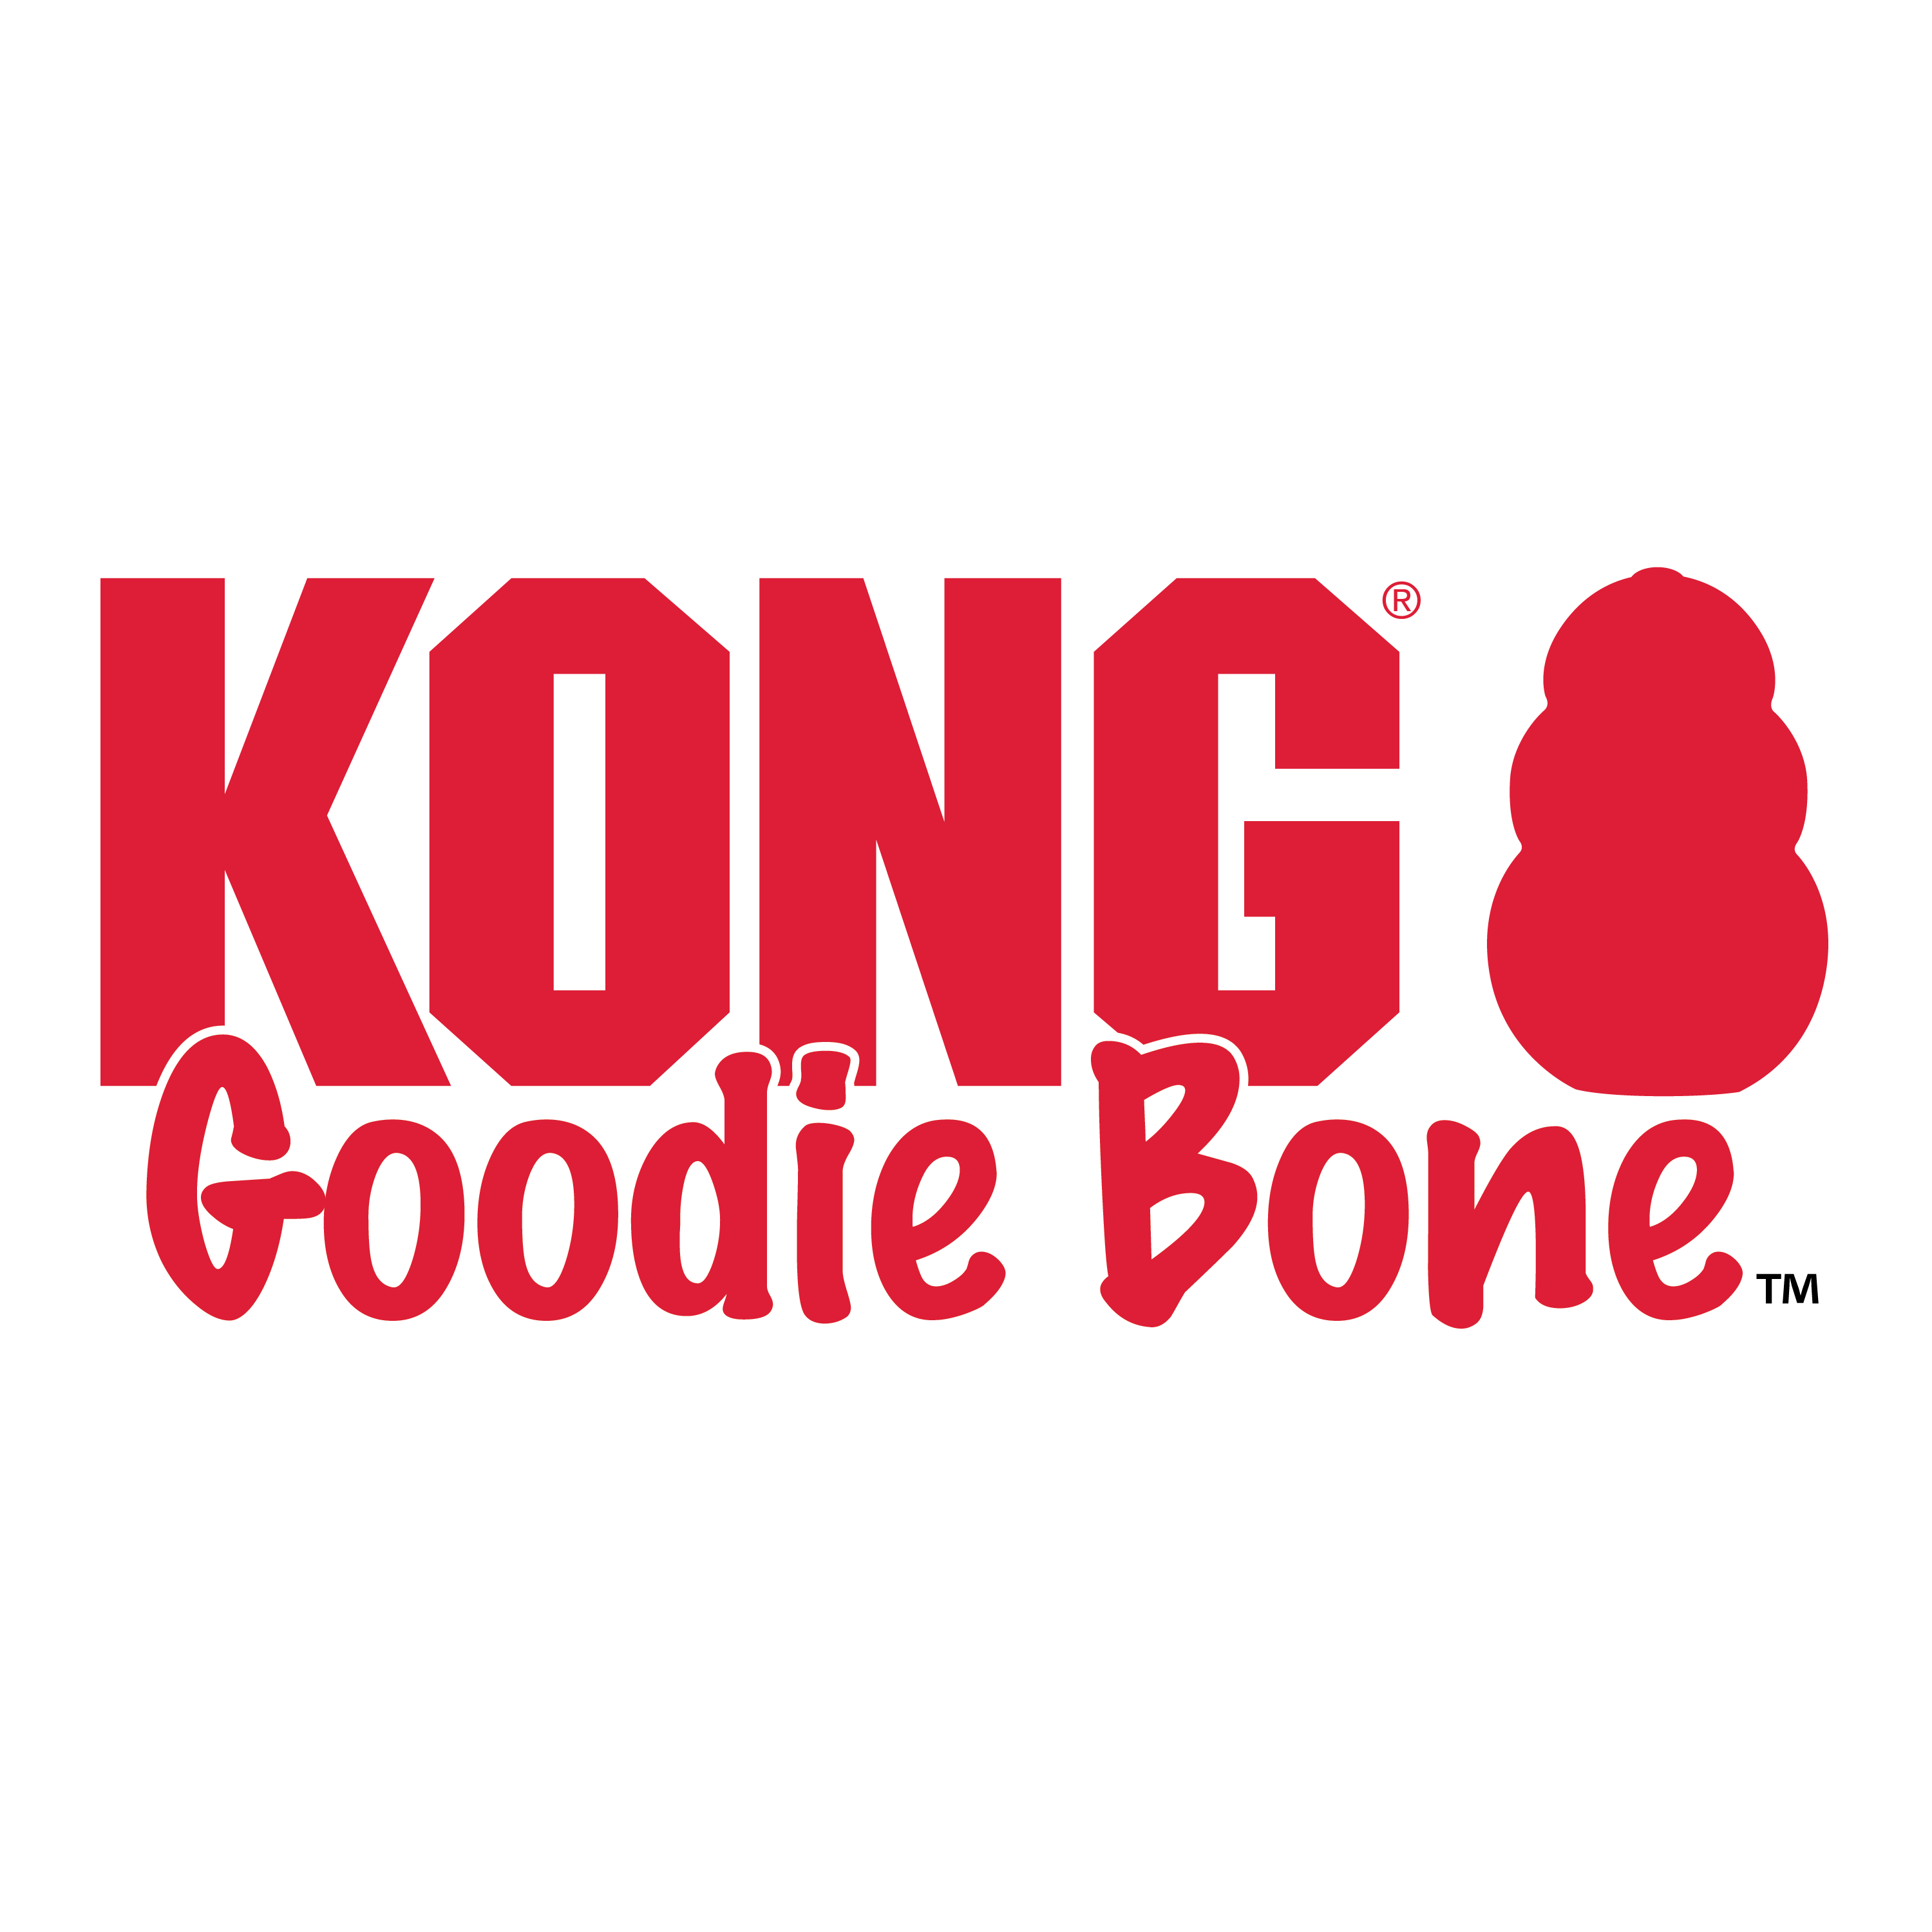 KONG Goodie Bone alt1 product image